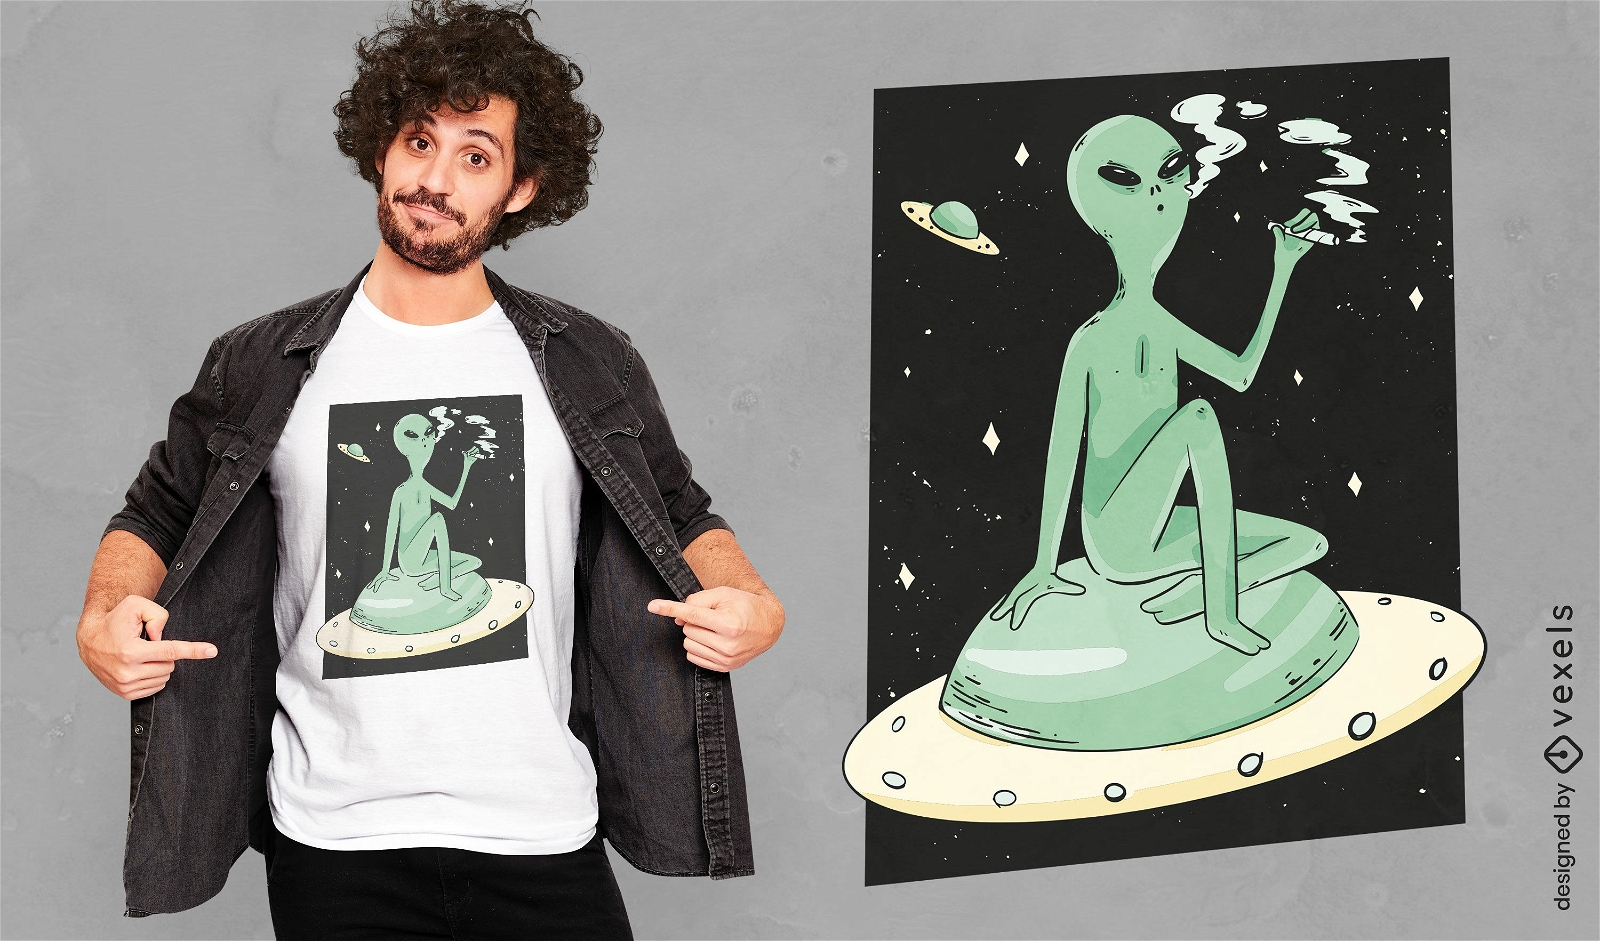 Alien fumando no design de camiseta espacial